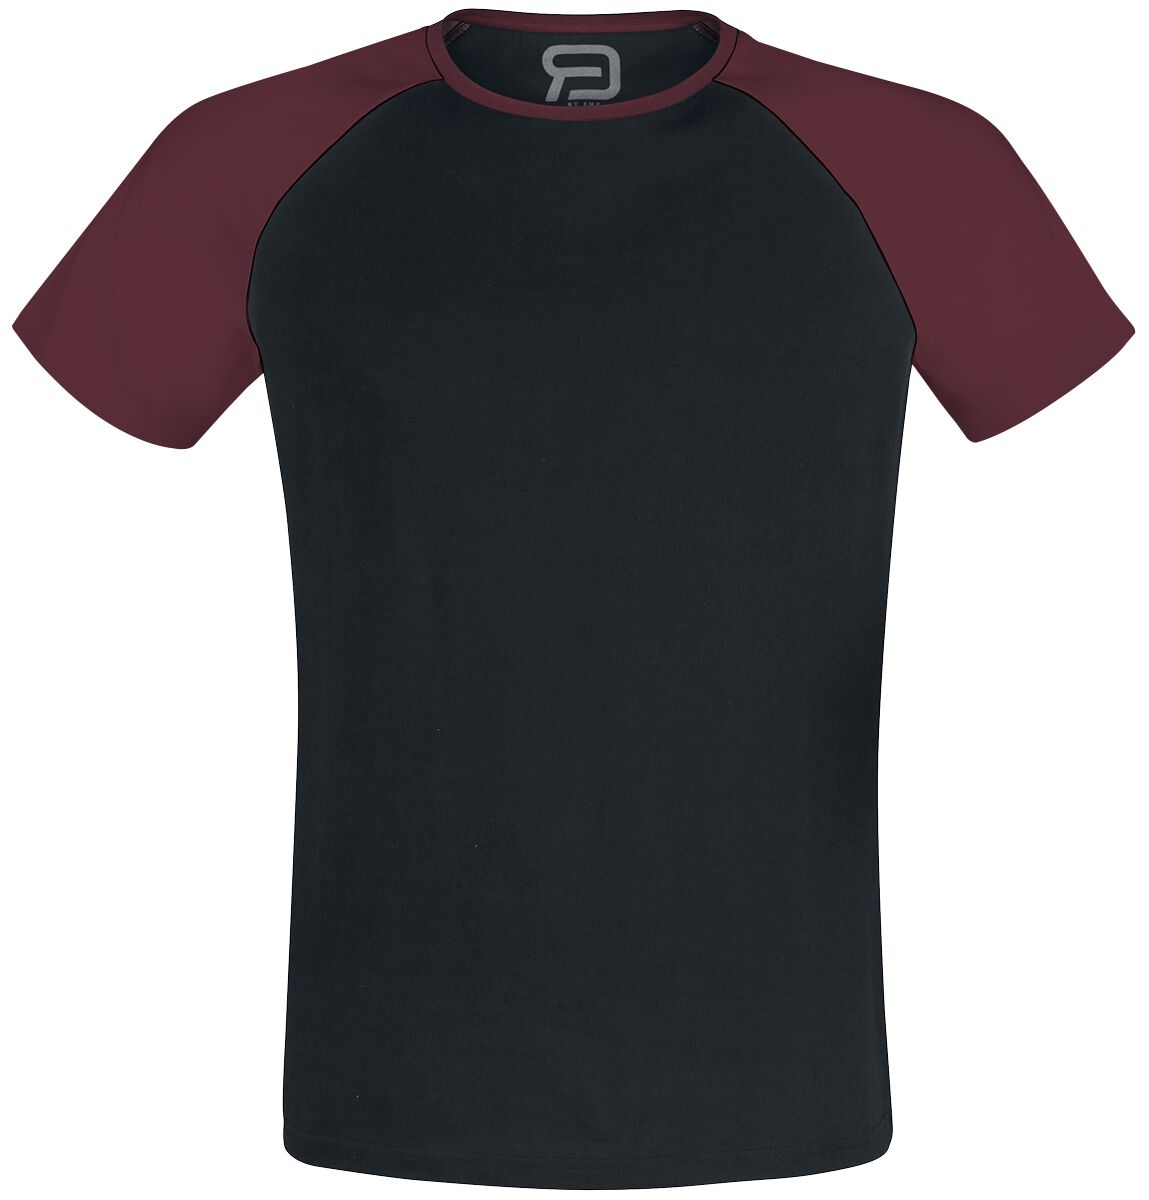 RED by EMP Short Raglan Road T-Shirt schwarz bordeaux in 4XL